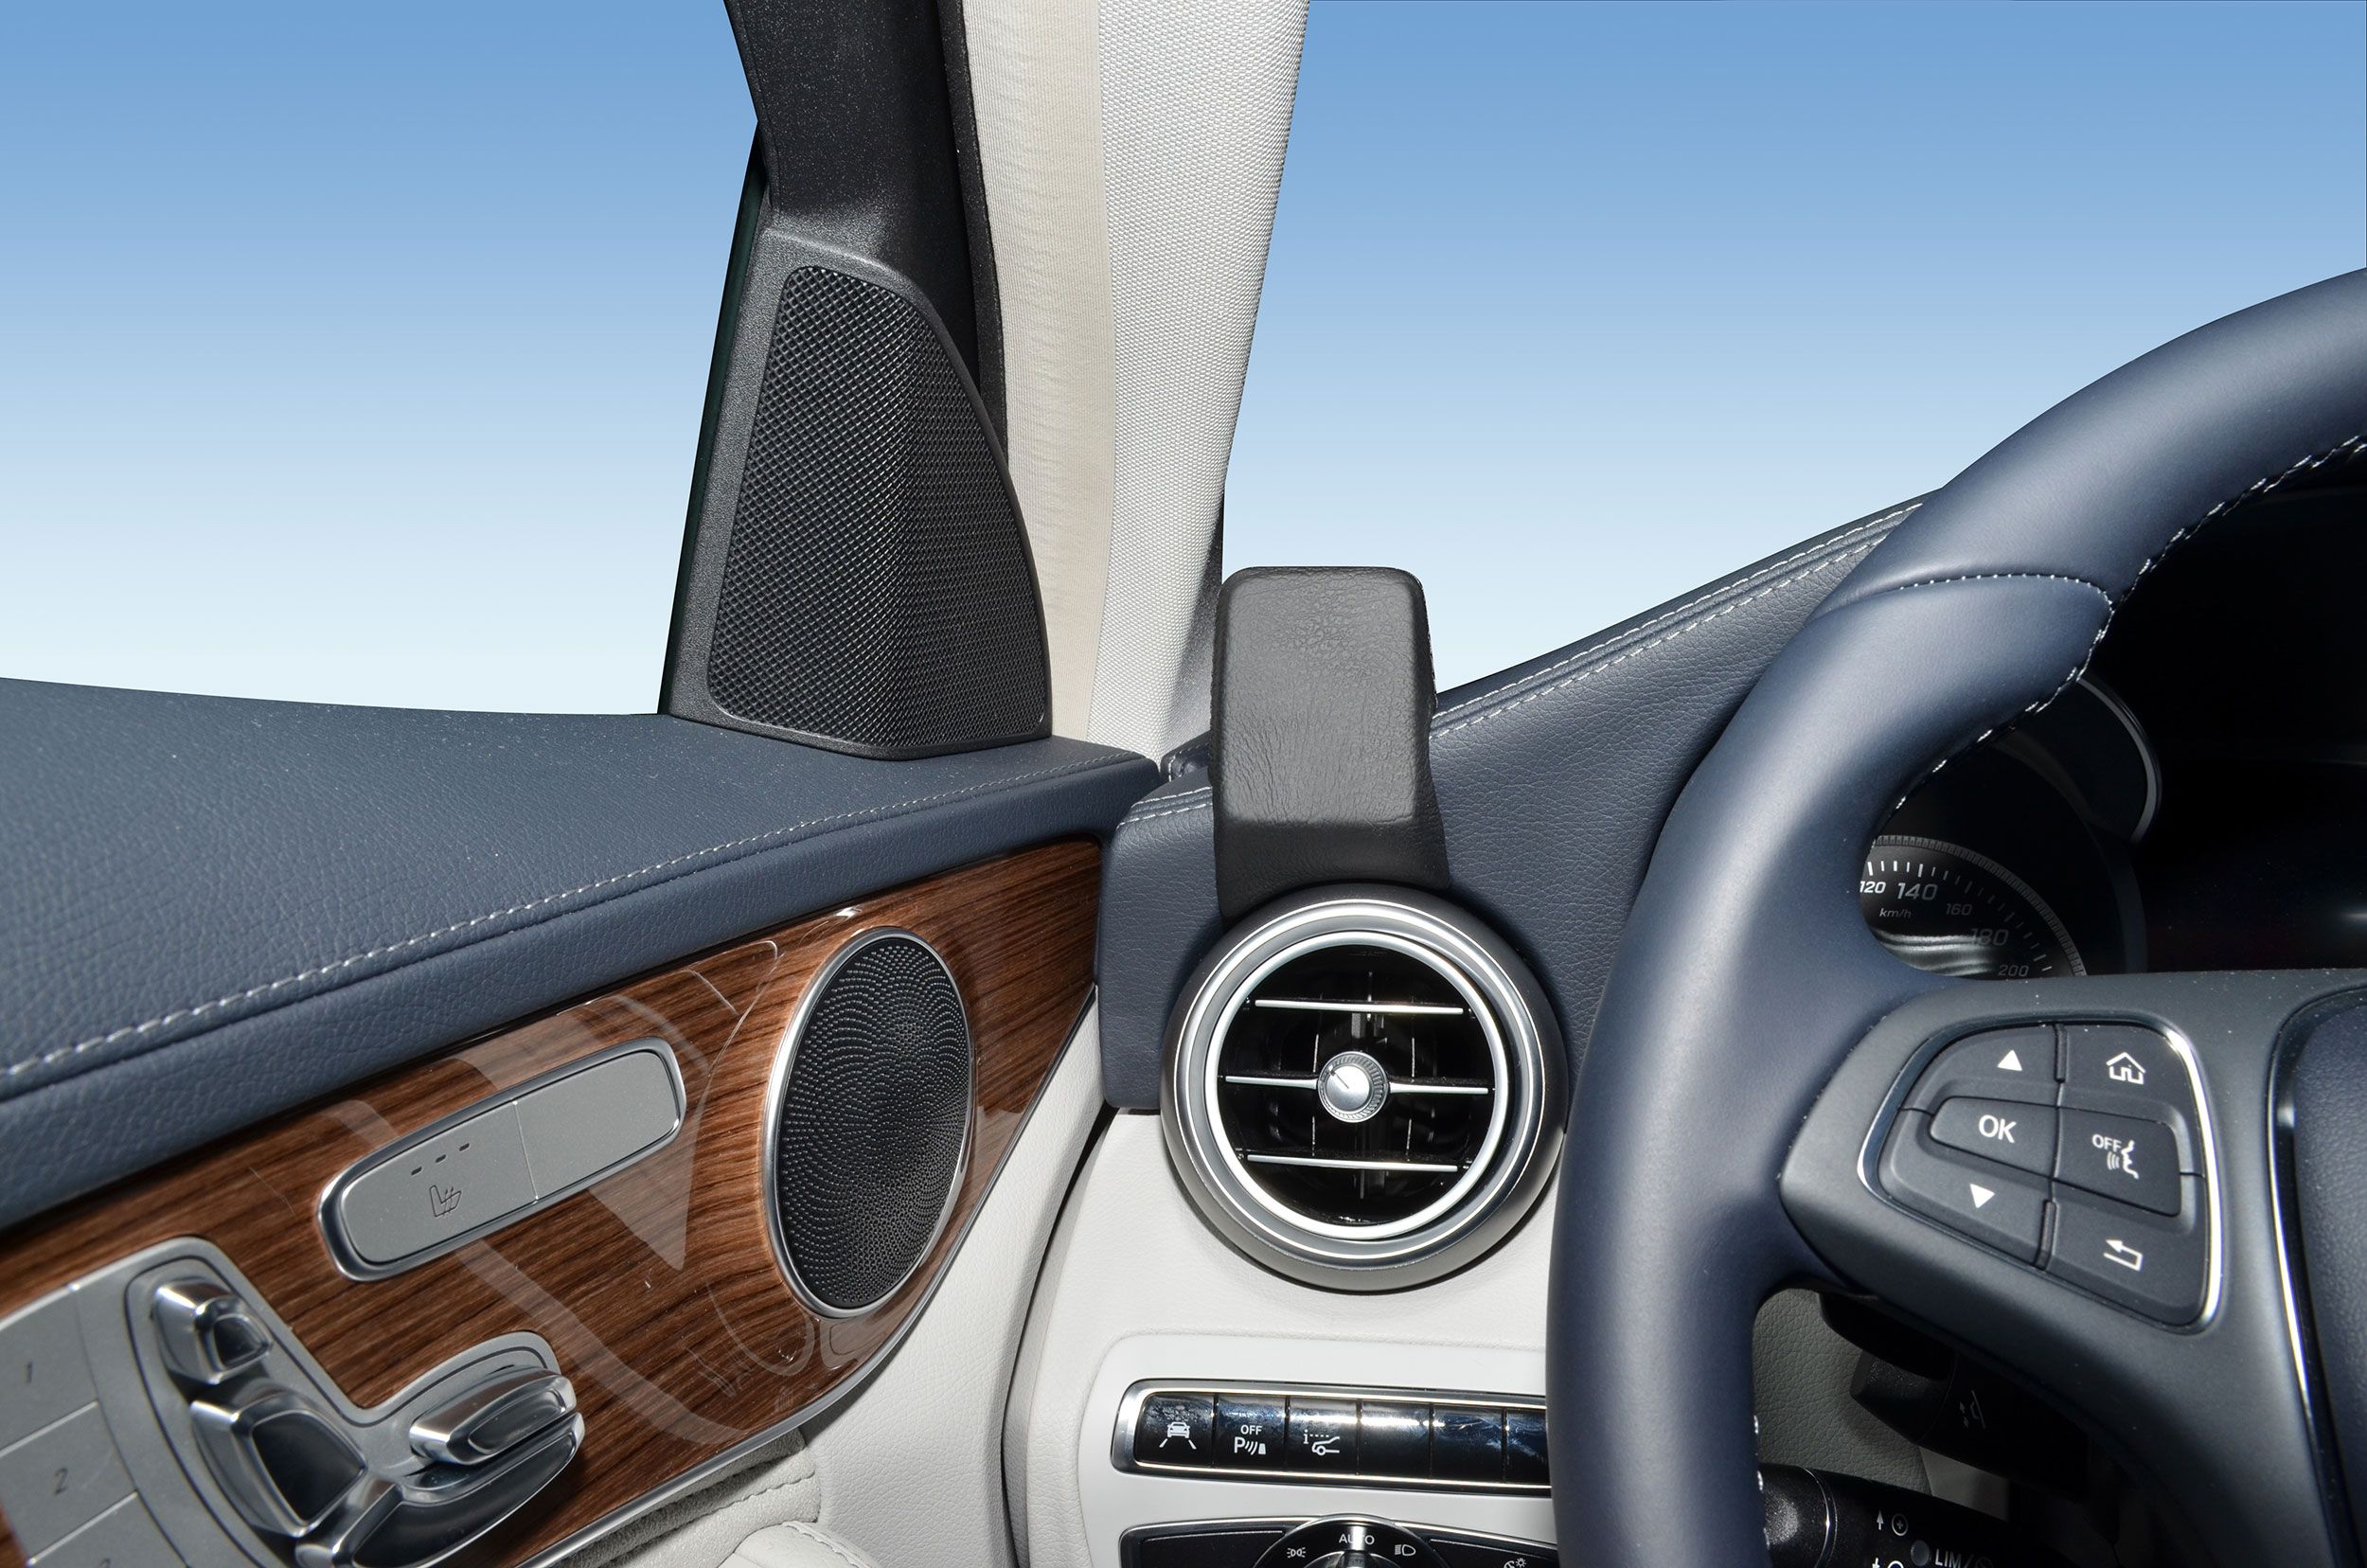 Kuda console Mercedes Benz C-Klasse 2014-2021 NAVI